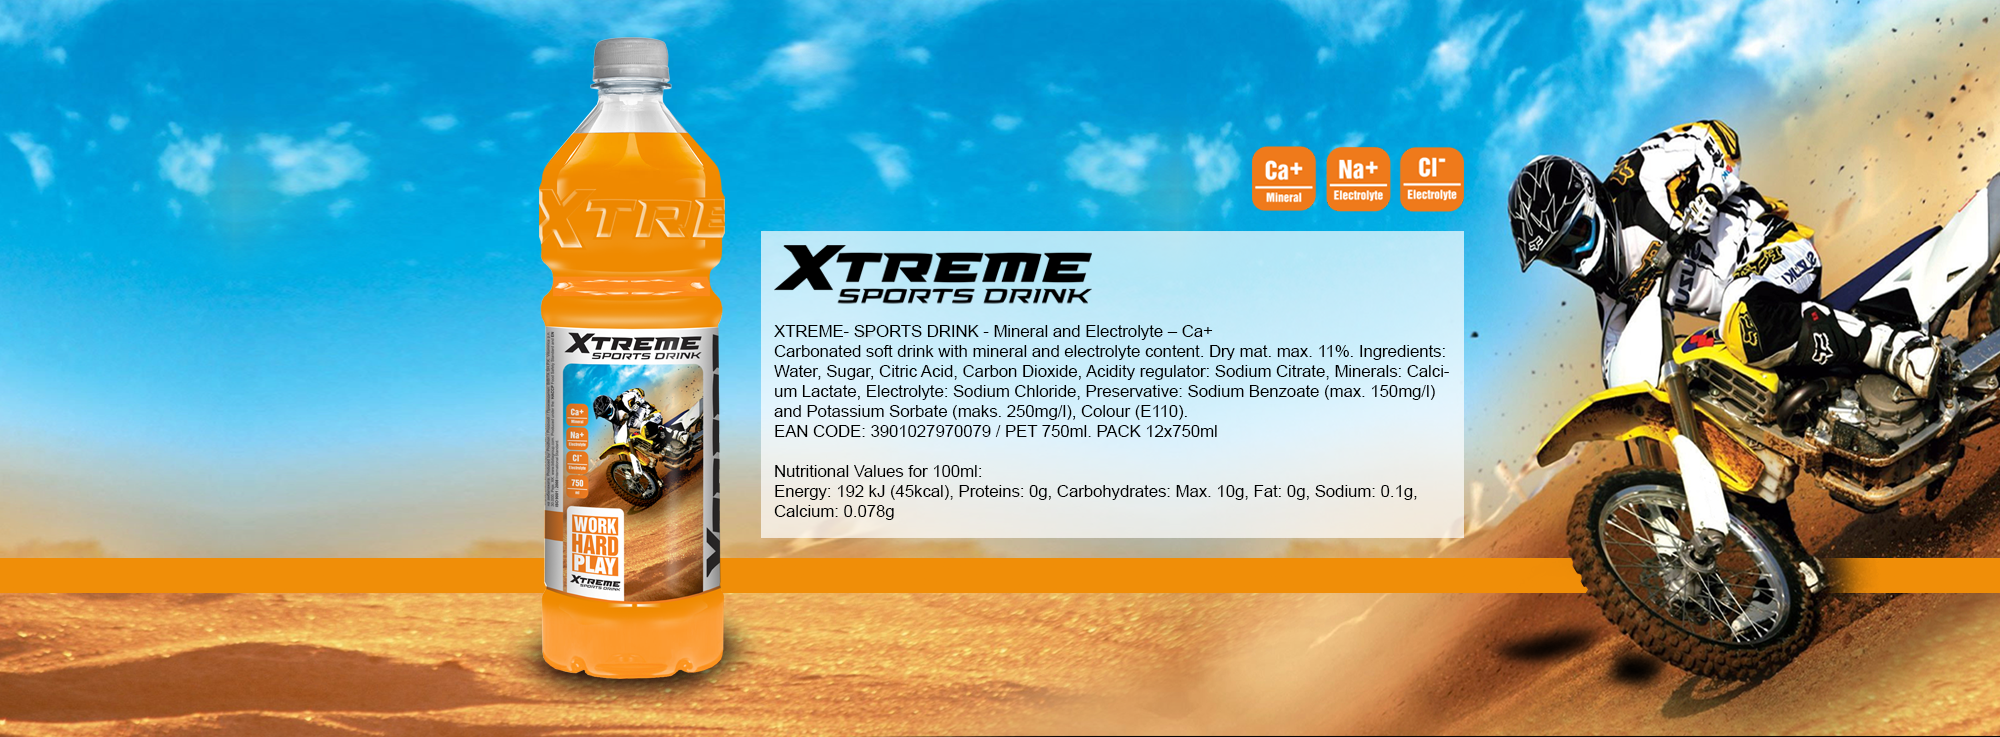 Xtreme sports drink